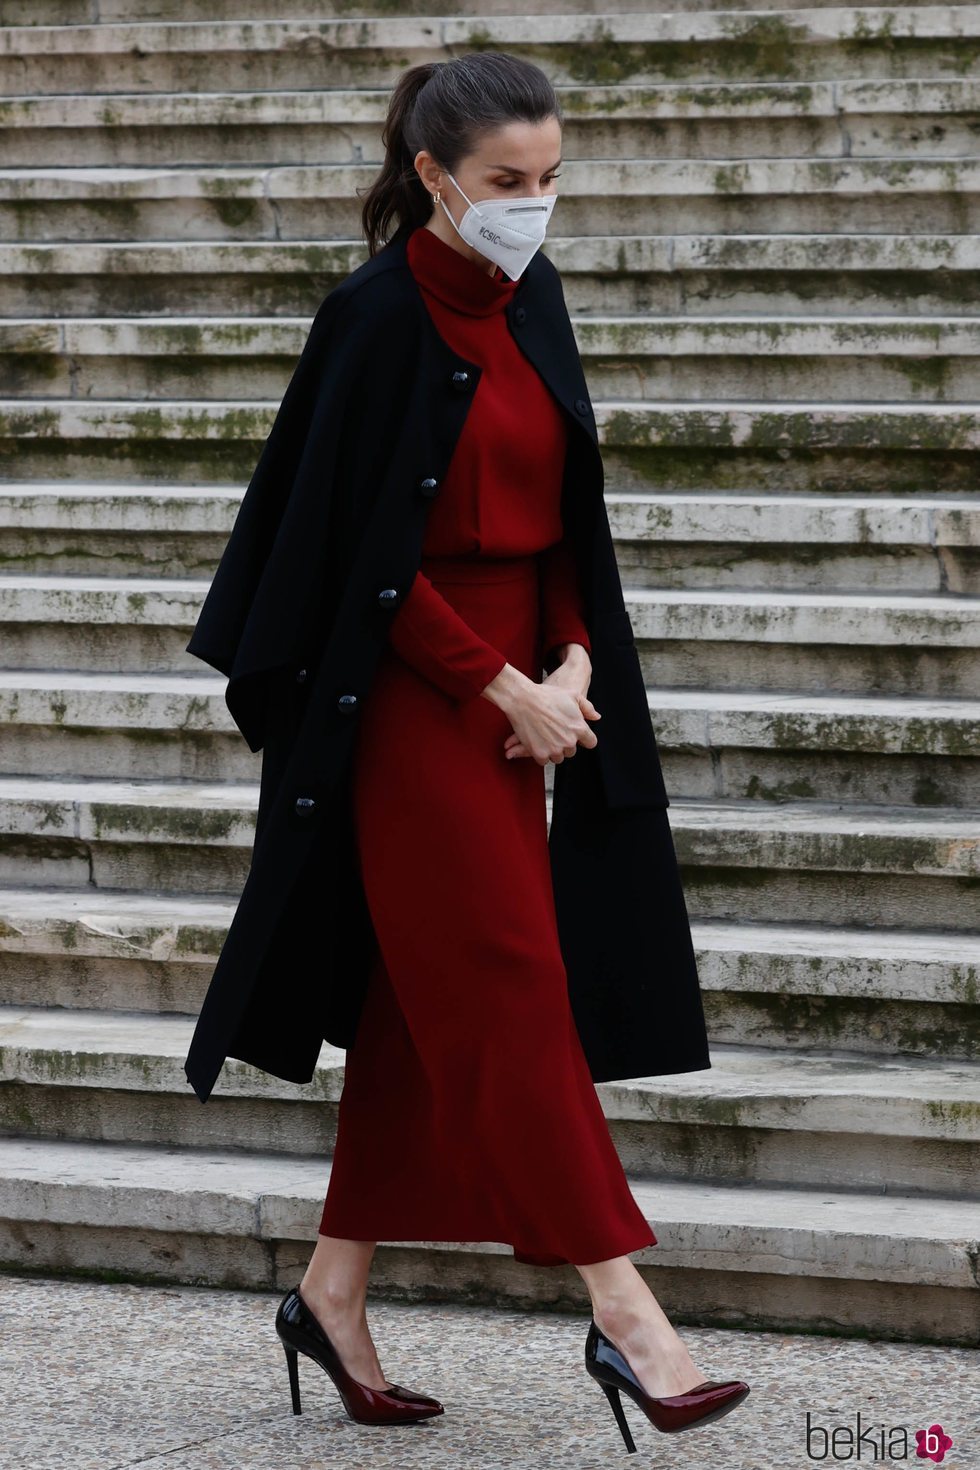 La Reina Letizia con un vestido burdeos de Massimo Dutti en la la Biblioteca Nacional de España